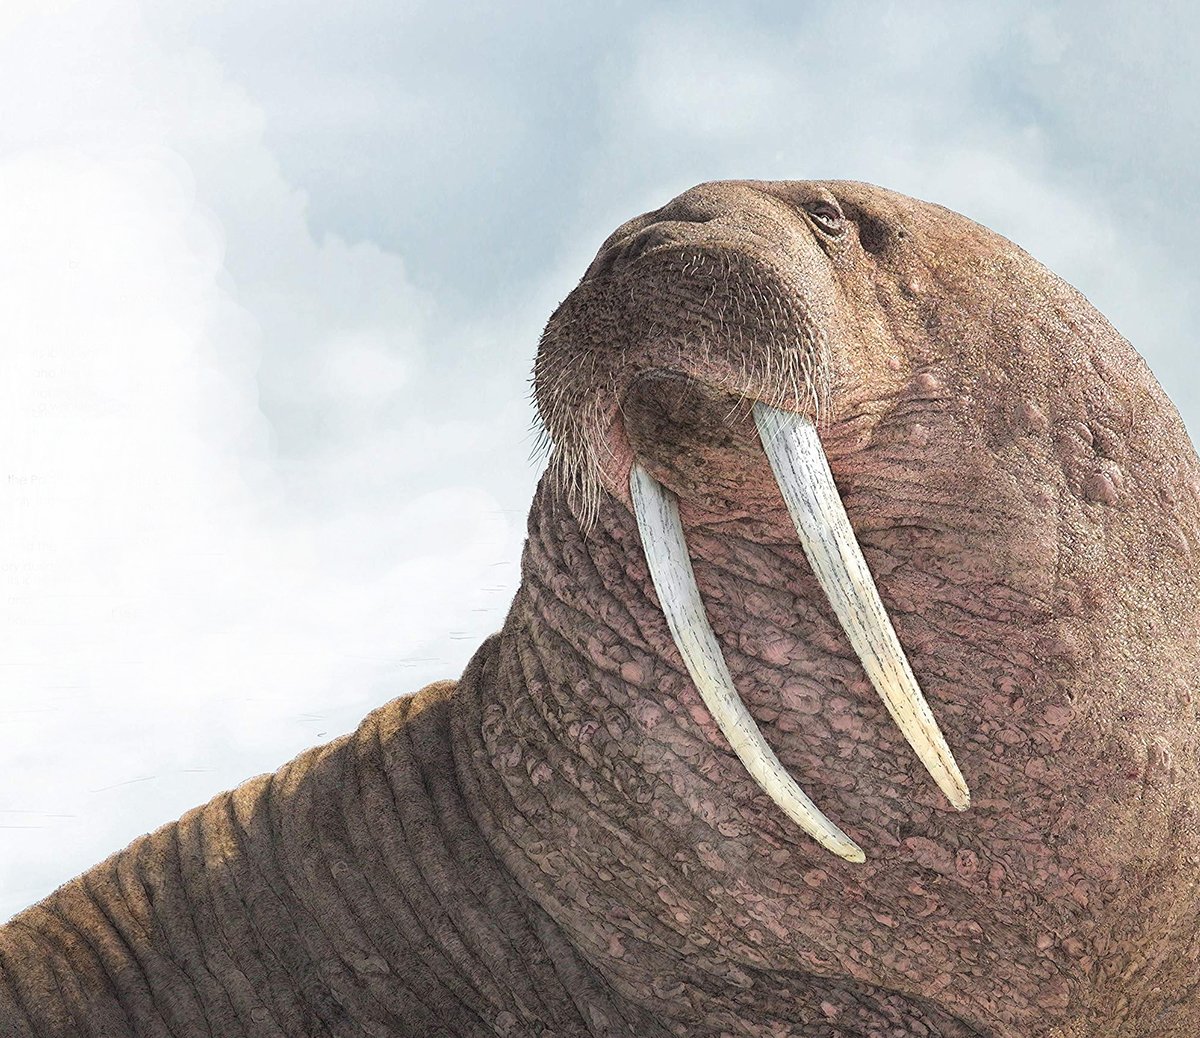 ben-rothery-walrus-illustration.jpg